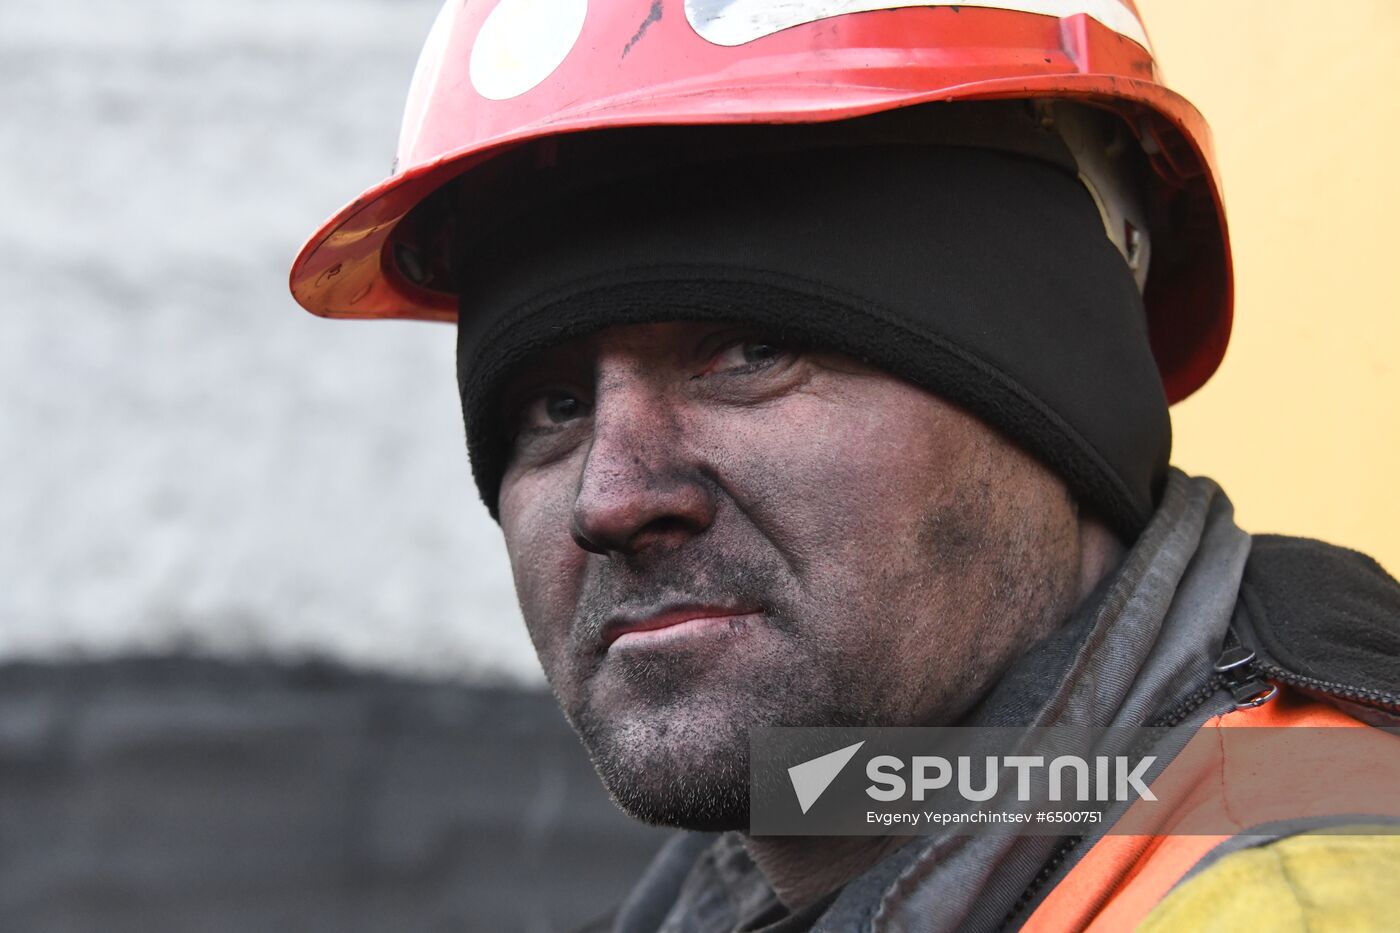 Russia Coal Mining